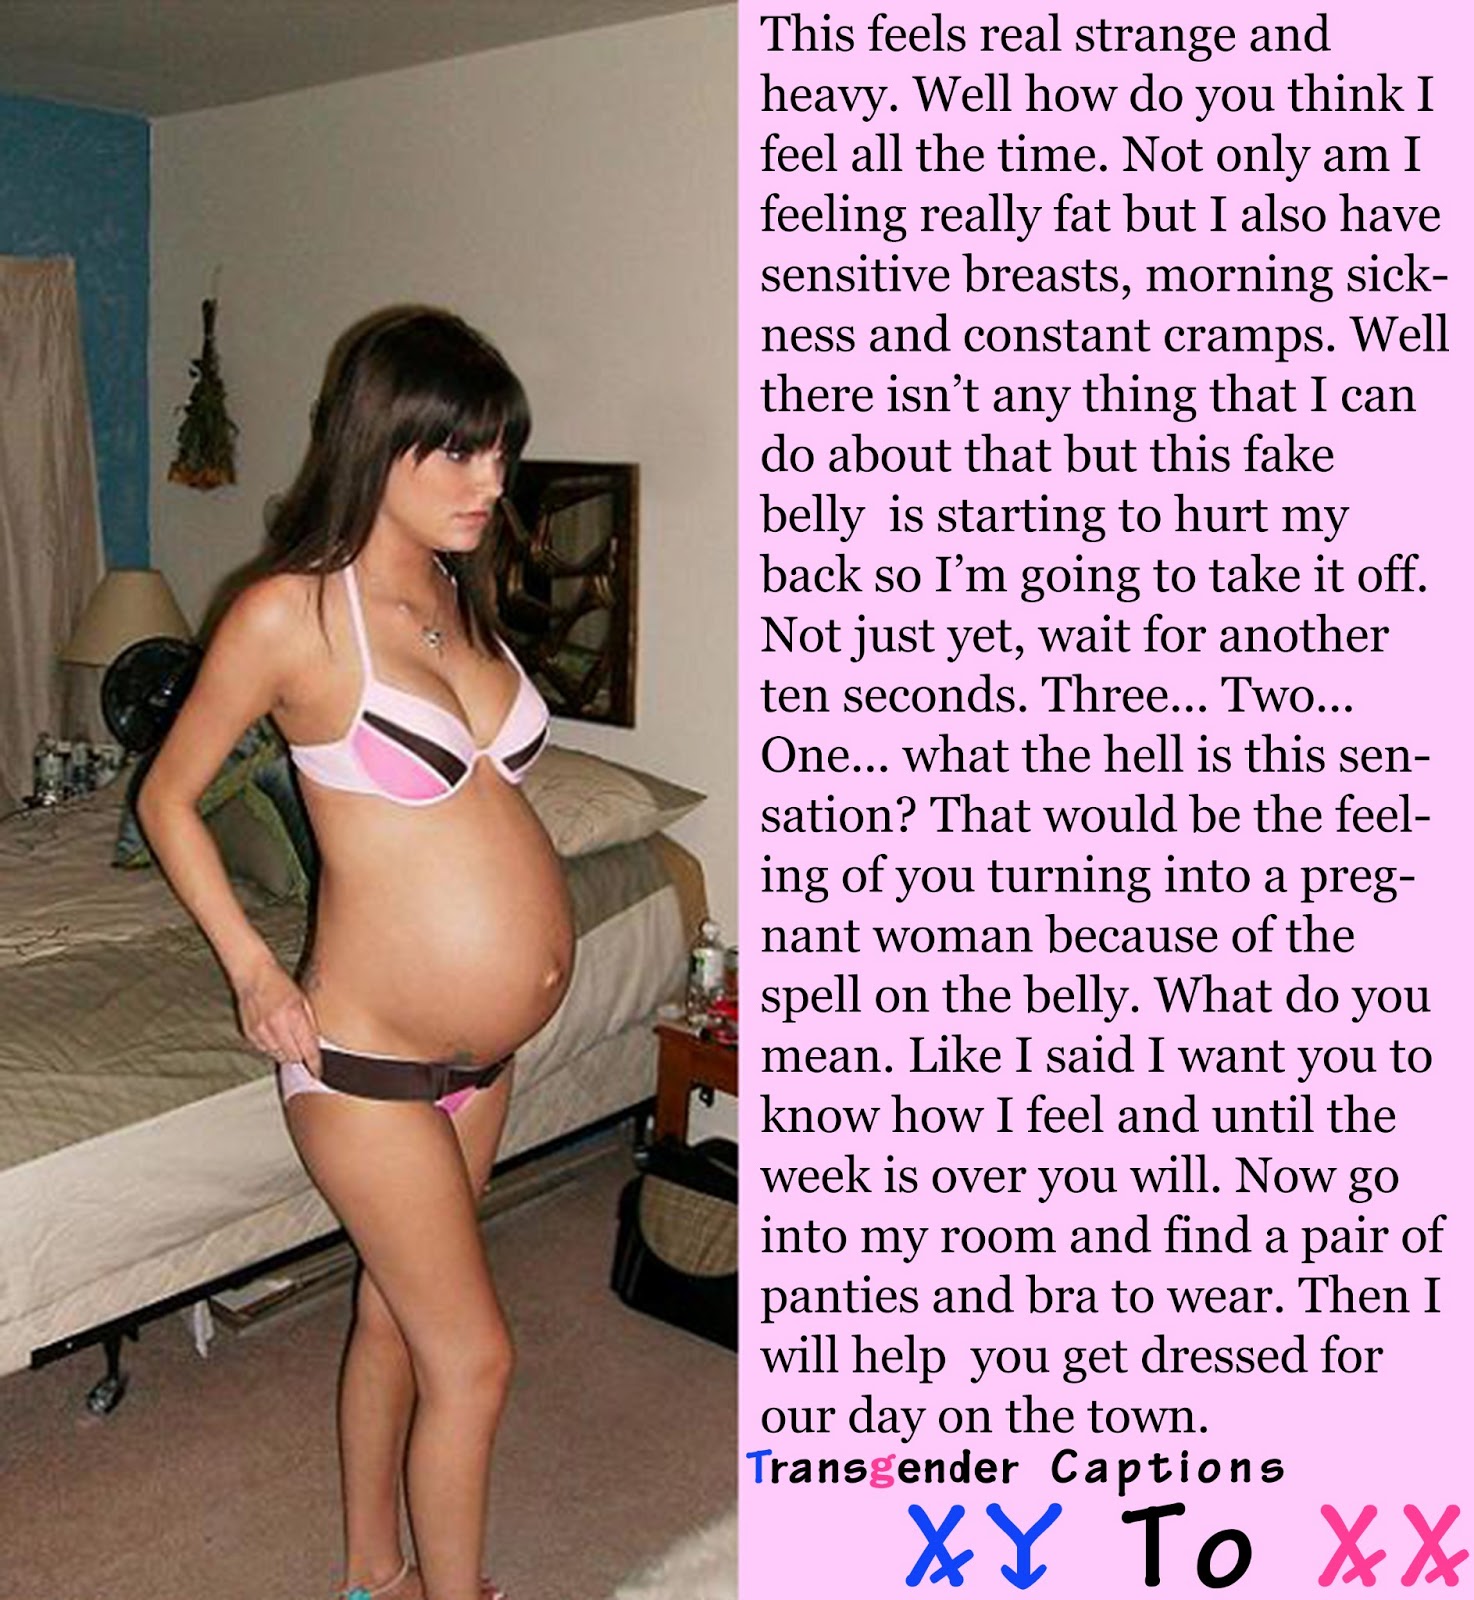 Transgender Caption. pregnancy. magic. caption. at 6/6/2013, 4:03:00 AM. 